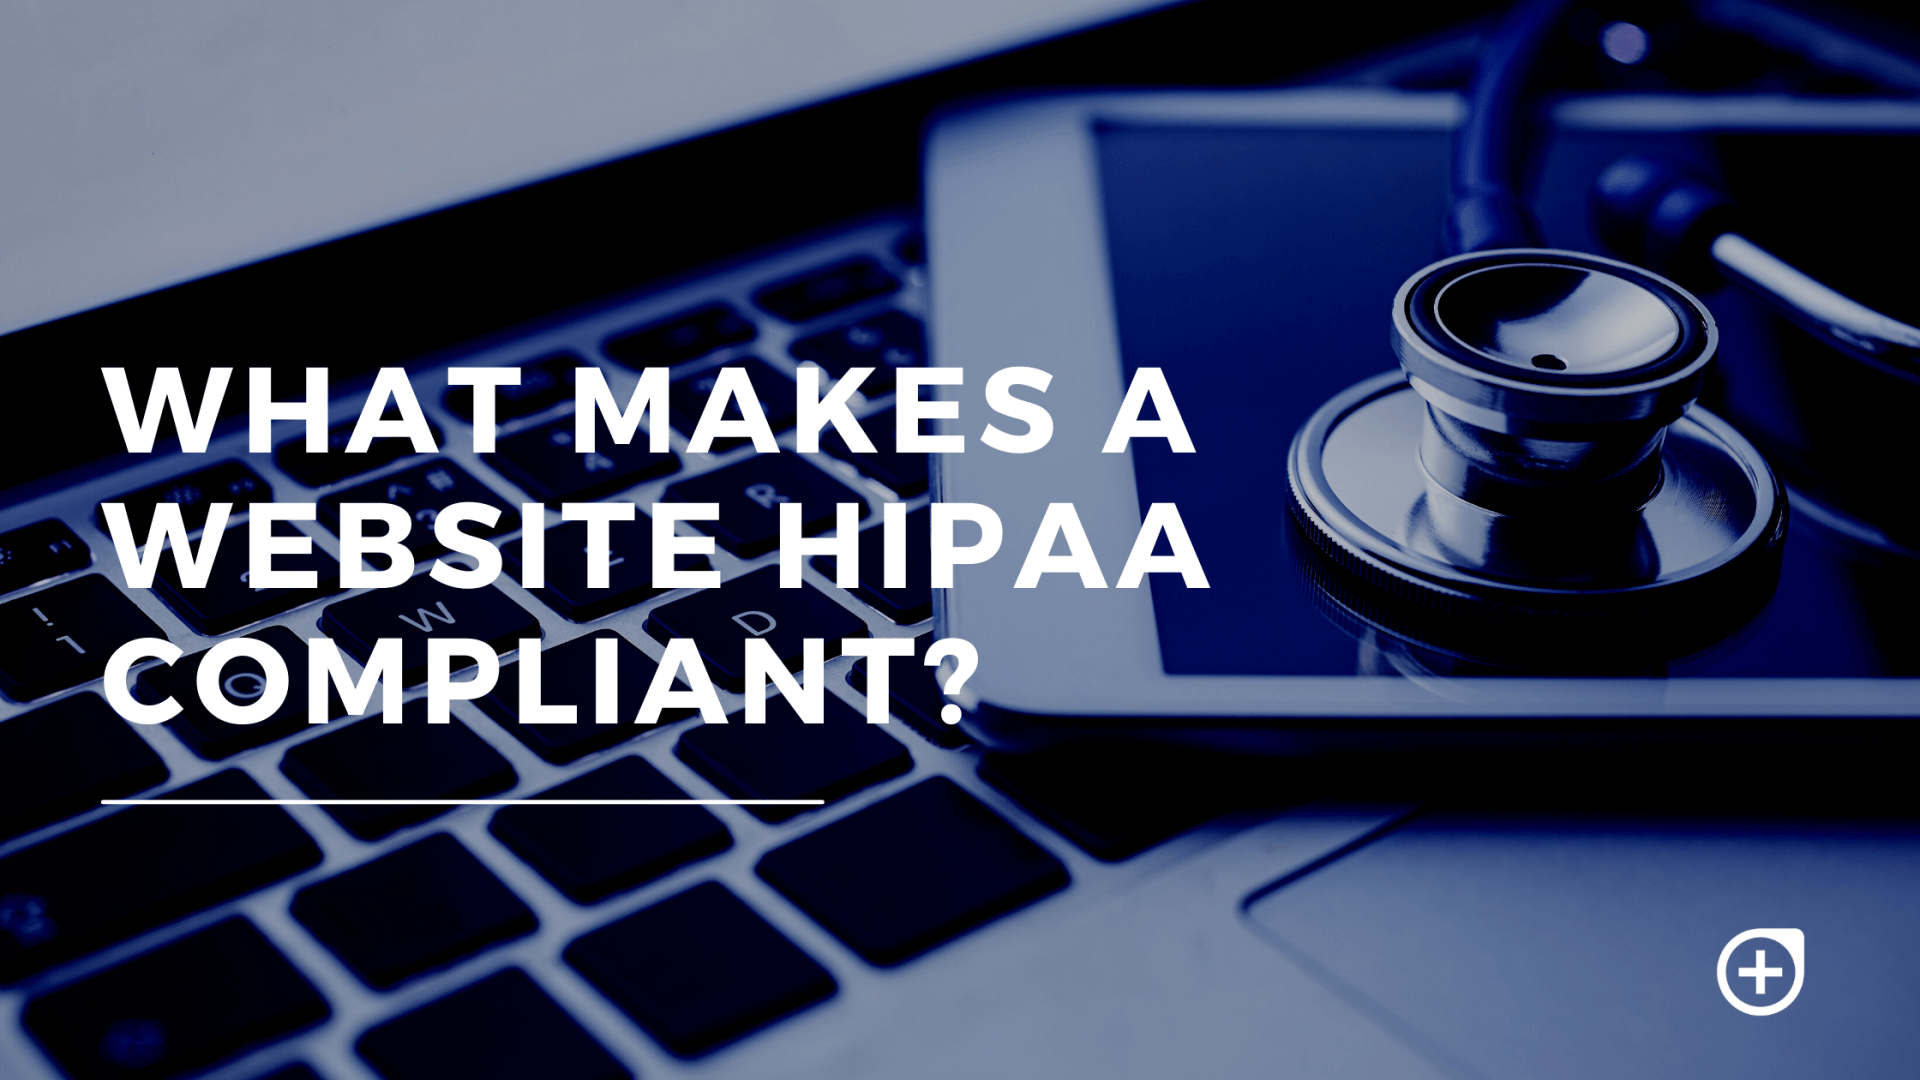 Healthcare compliant hipaa website